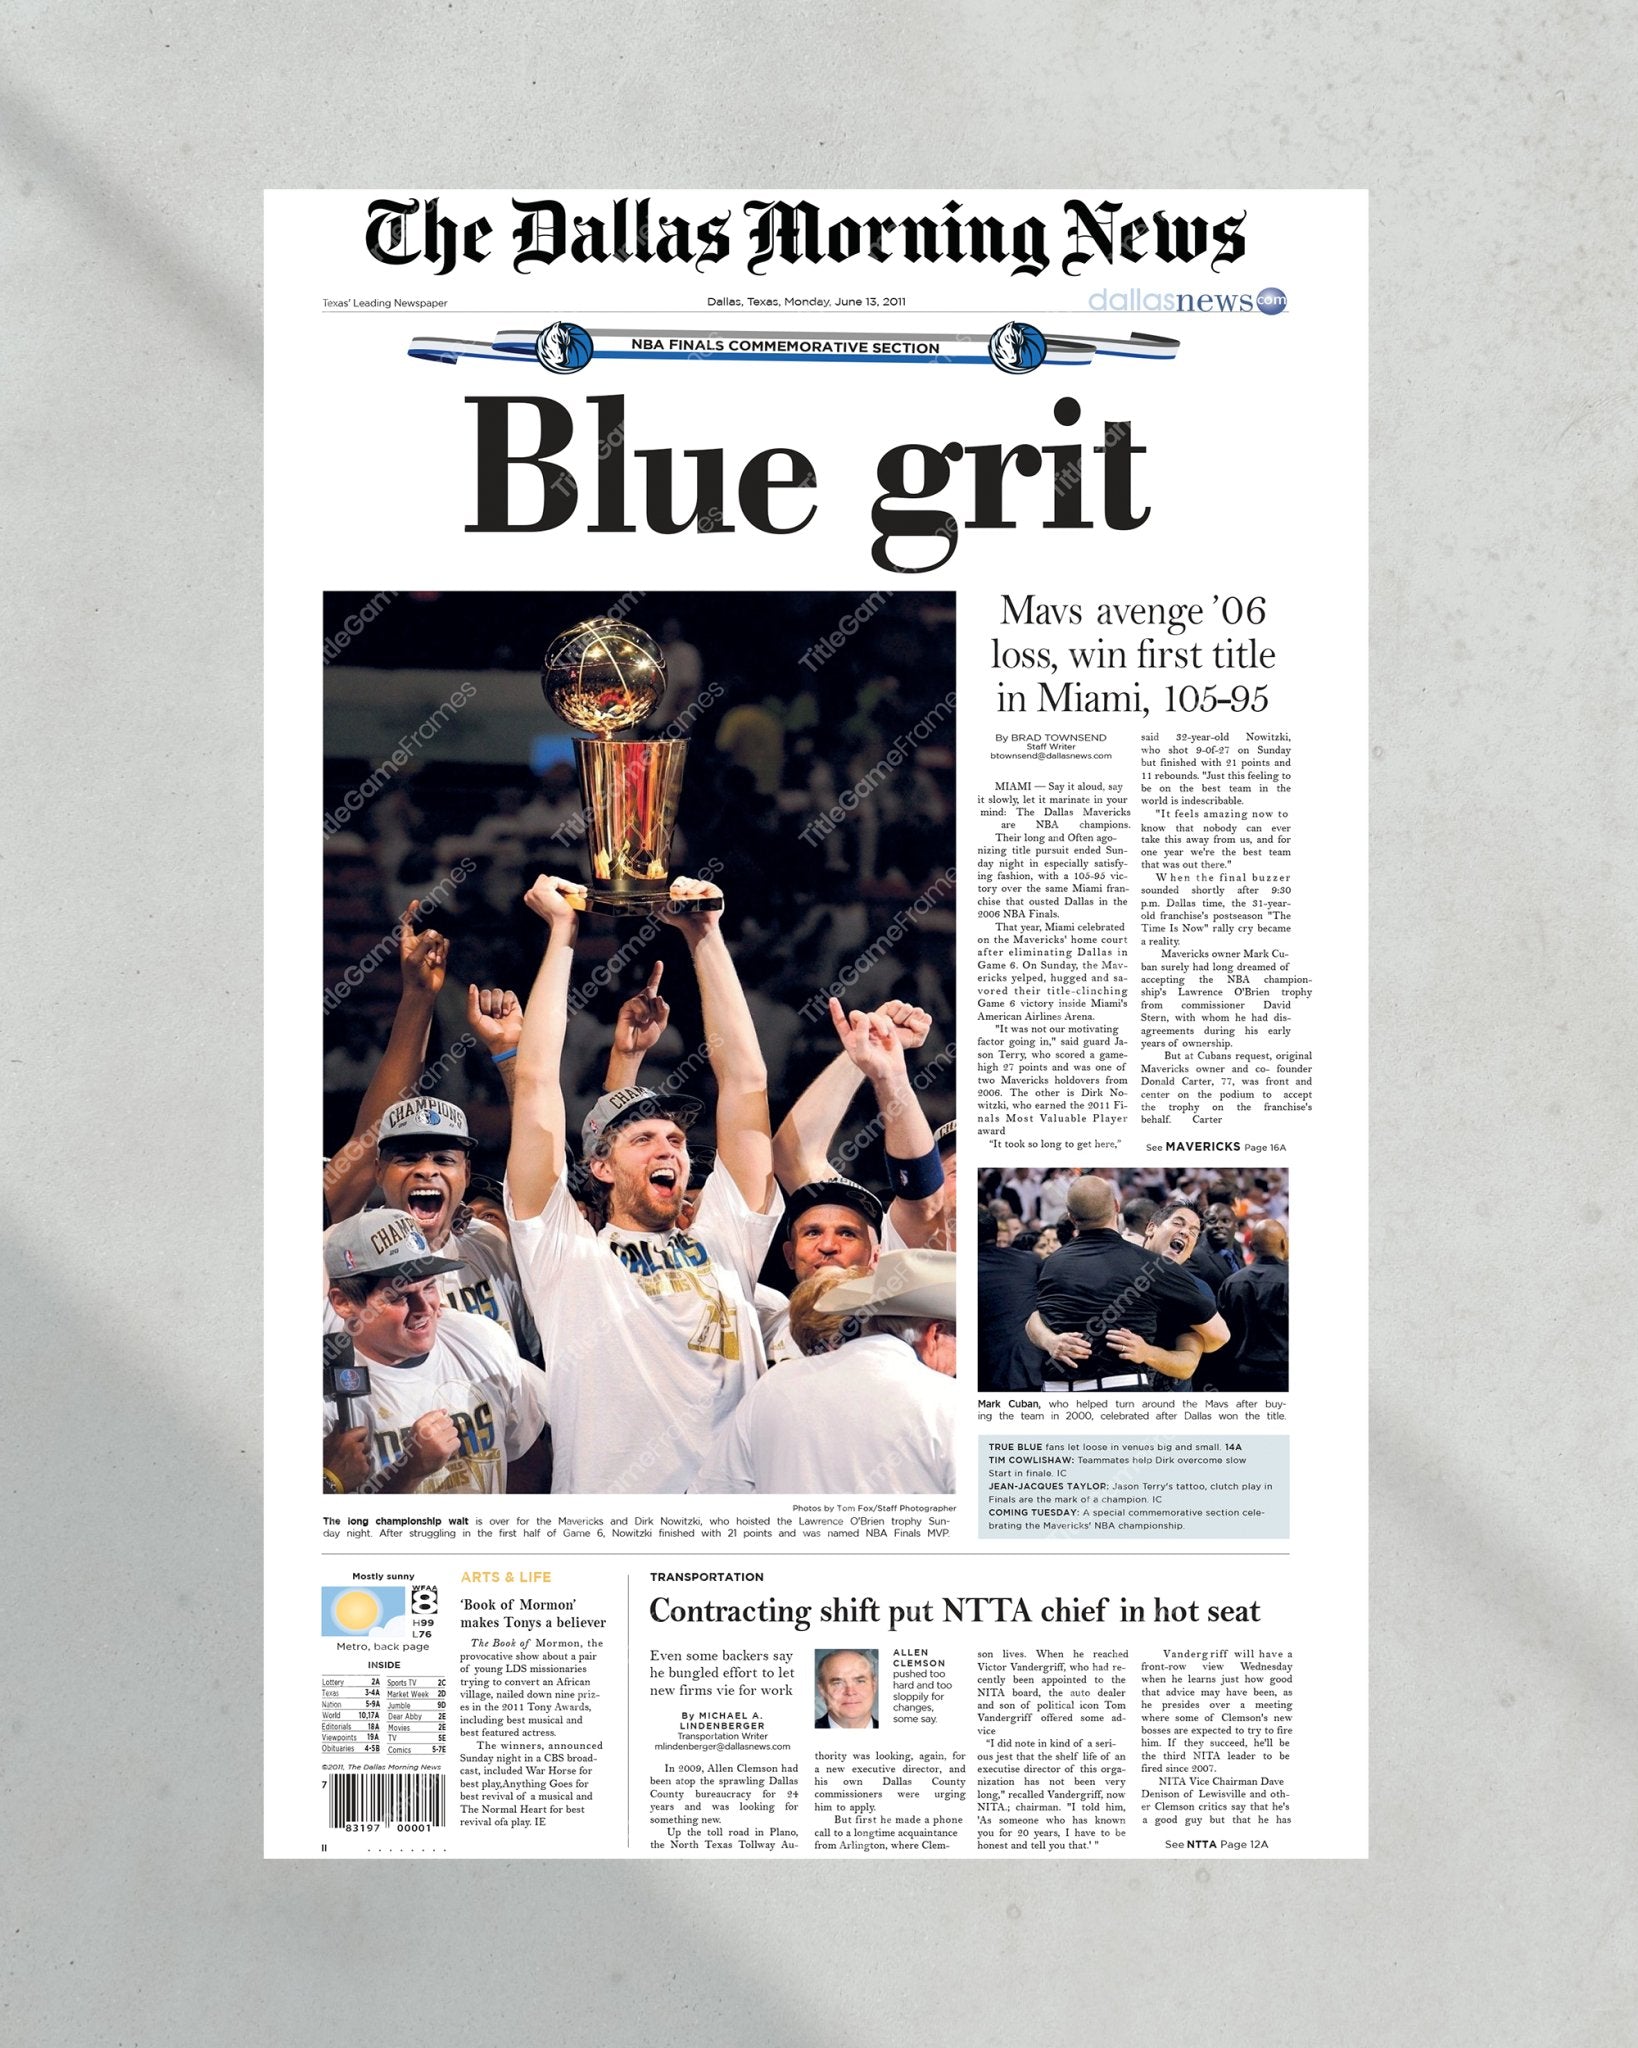 2011 Dallas Mavericks NBA Basketball Championship 'Blue grit' Framed Newspaper - Title Game Frames